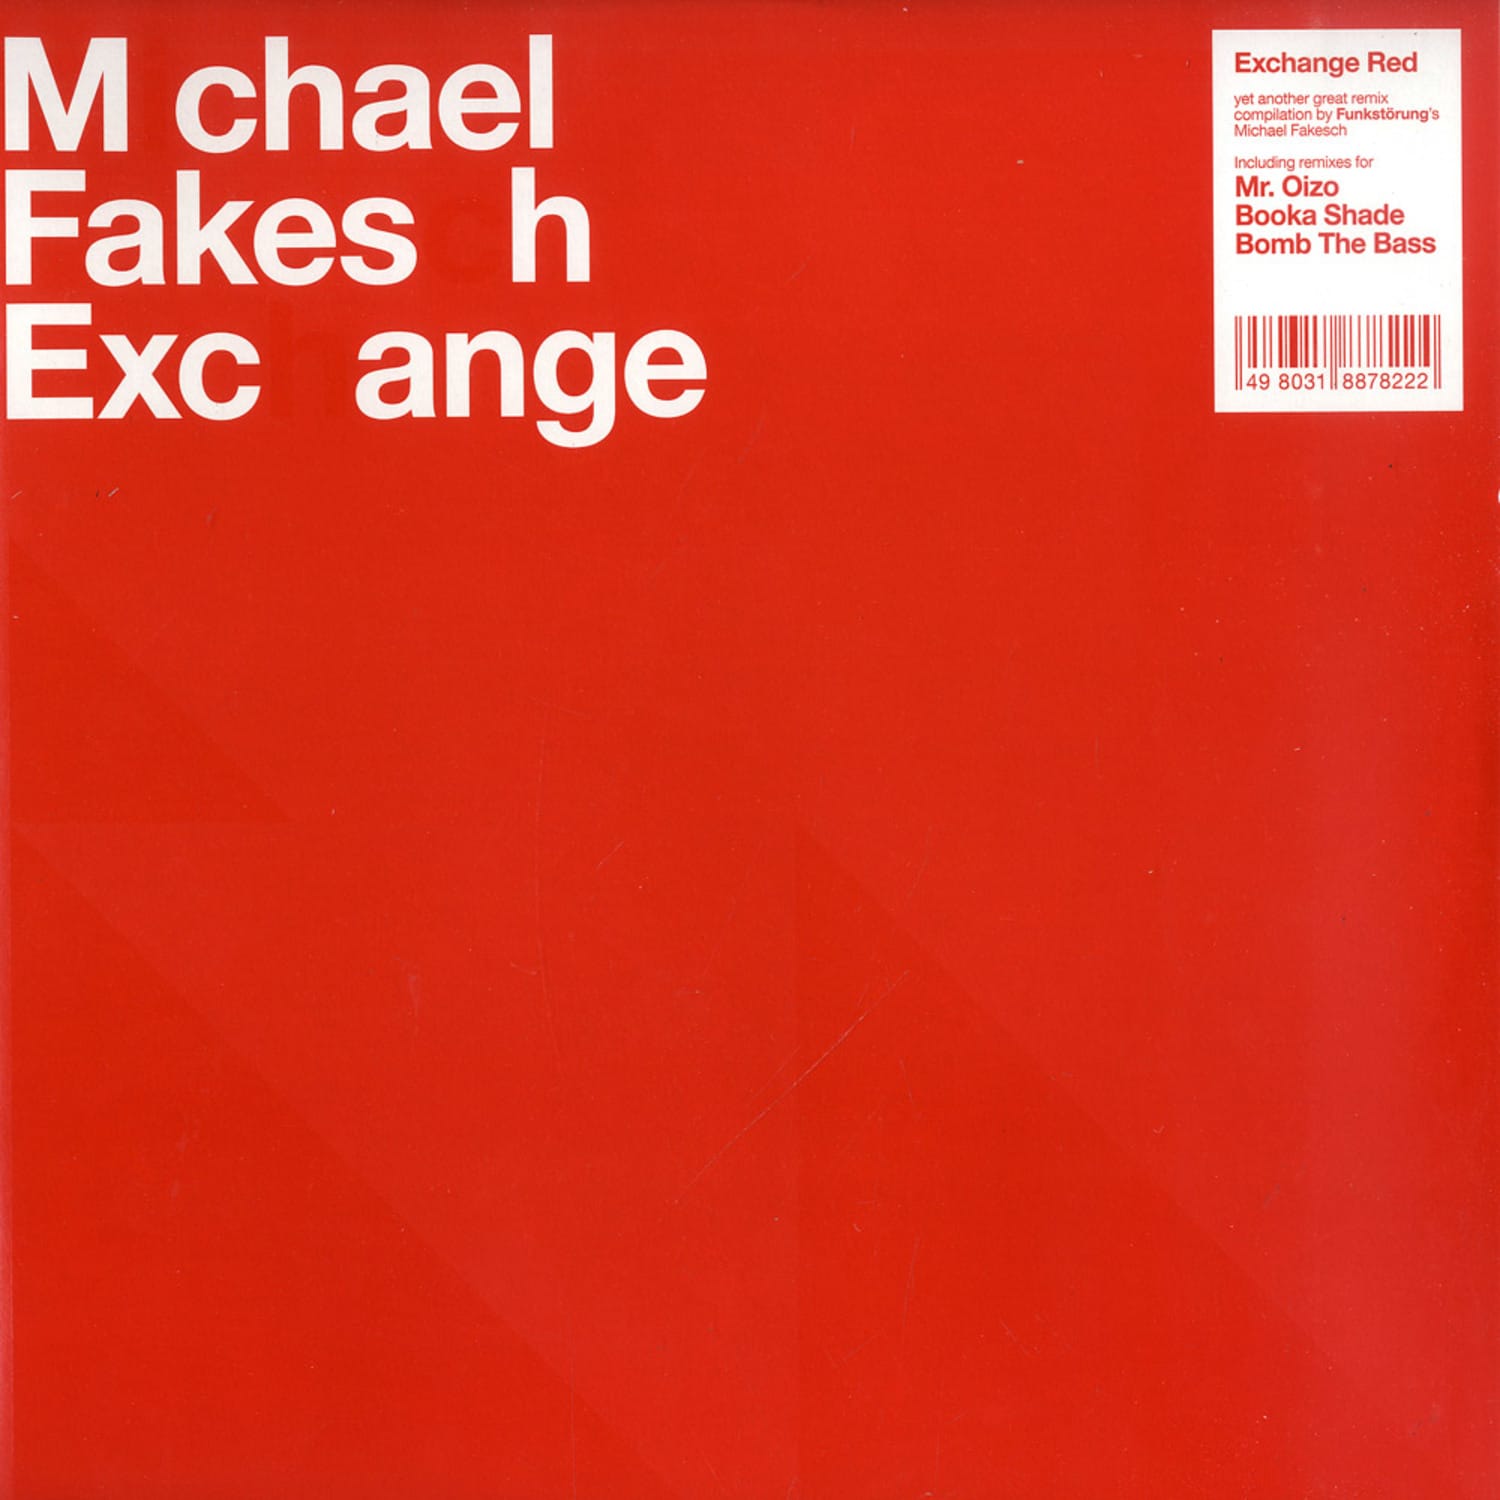 Michael Fakesch Remixes - EXCHANGE RED E.P.